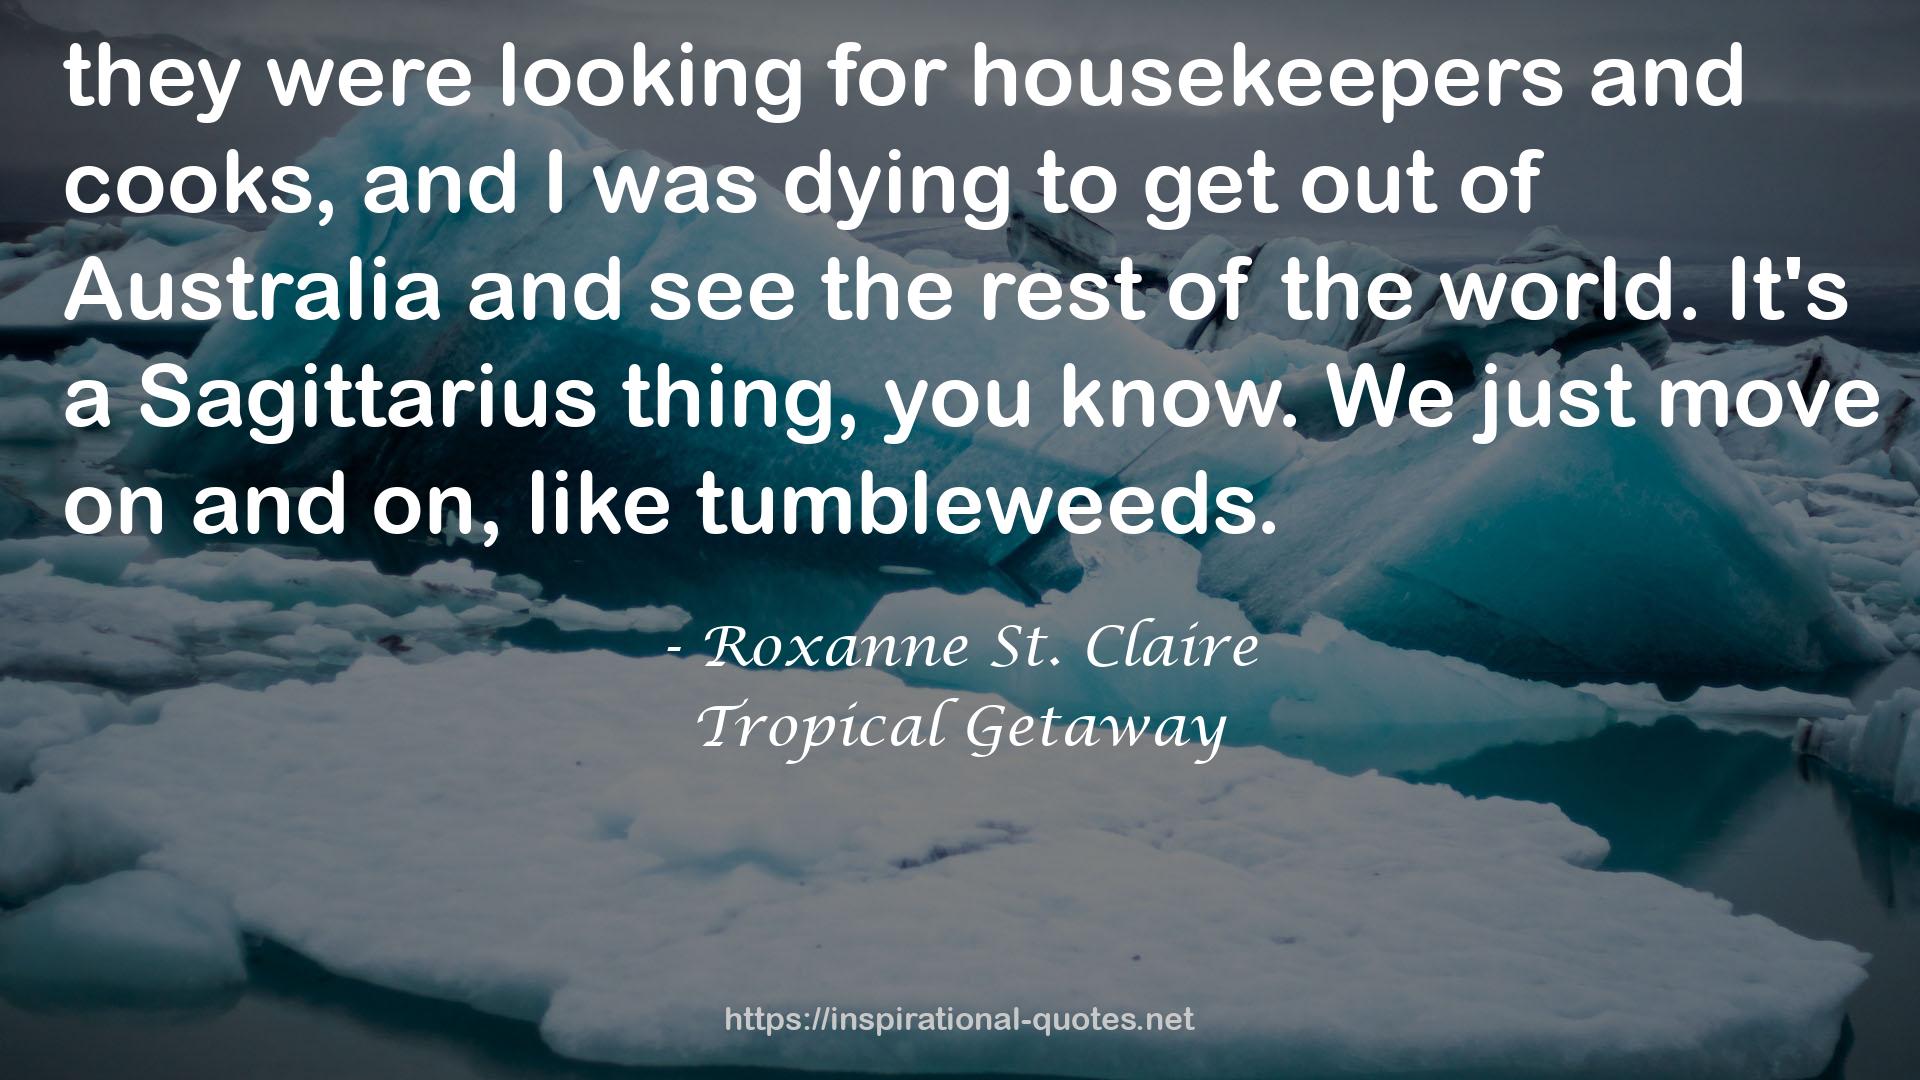 Roxanne St. Claire QUOTES